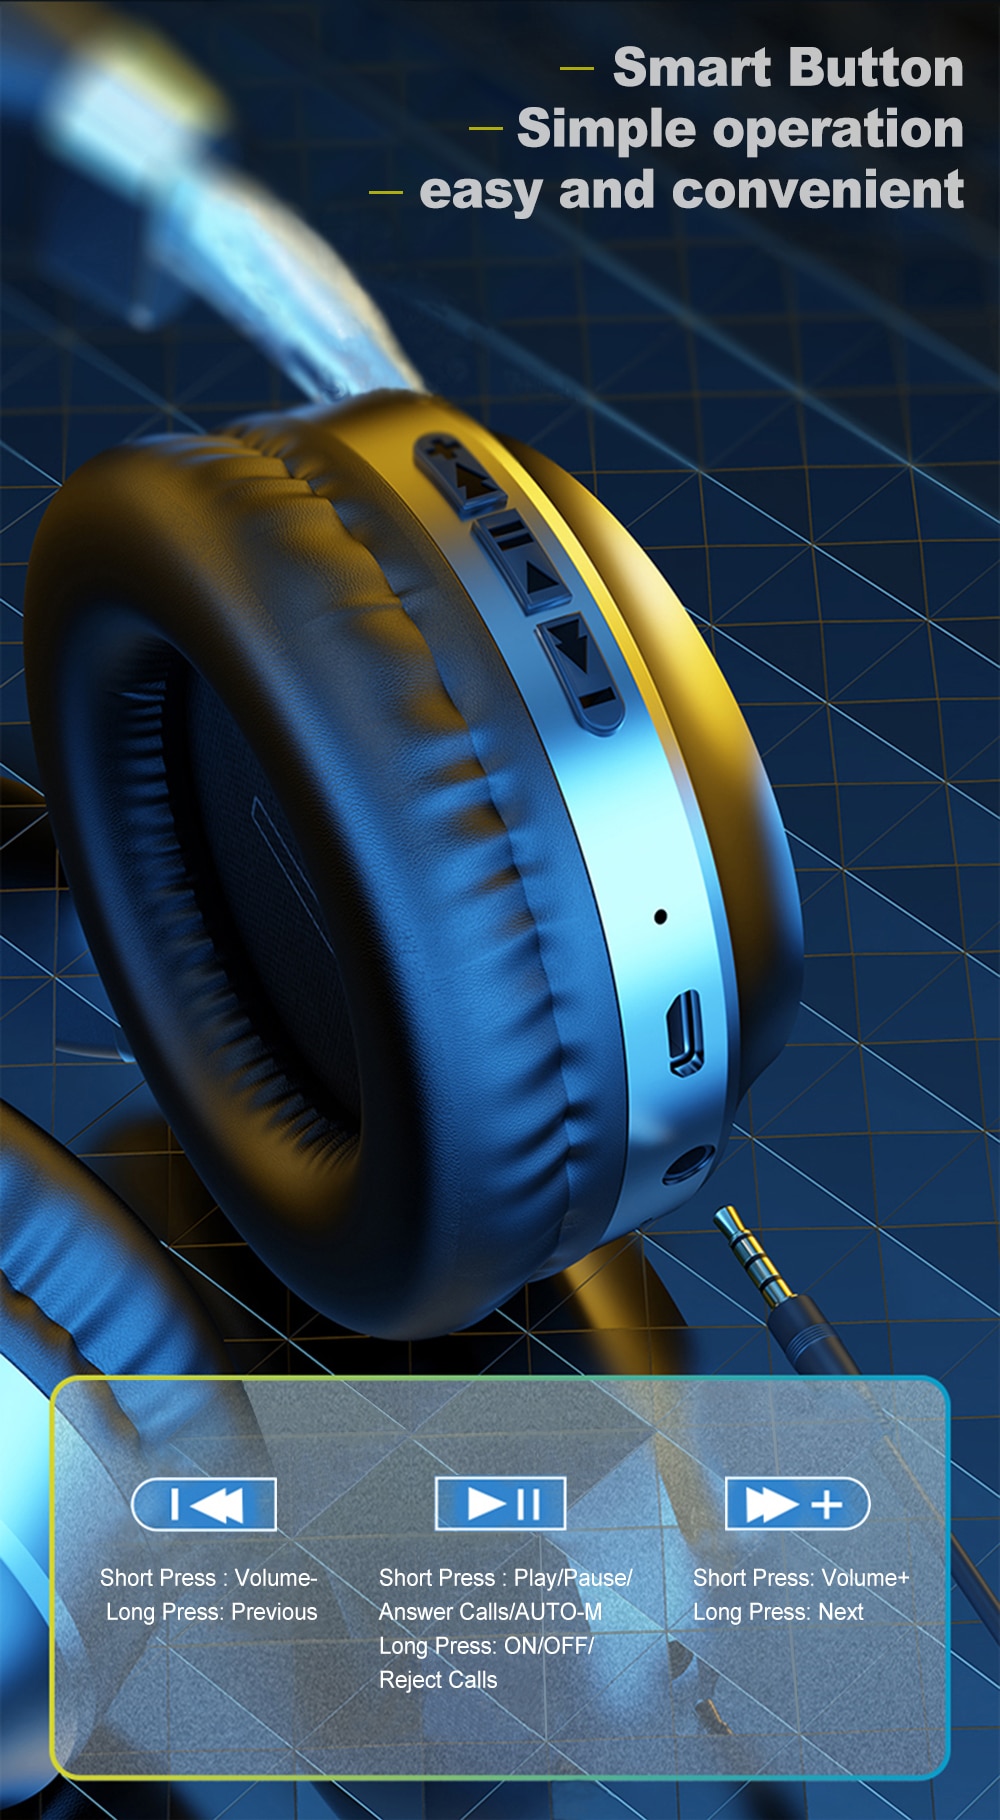 IKOLE 5.0 Wireless Noise Cancelling Headphones